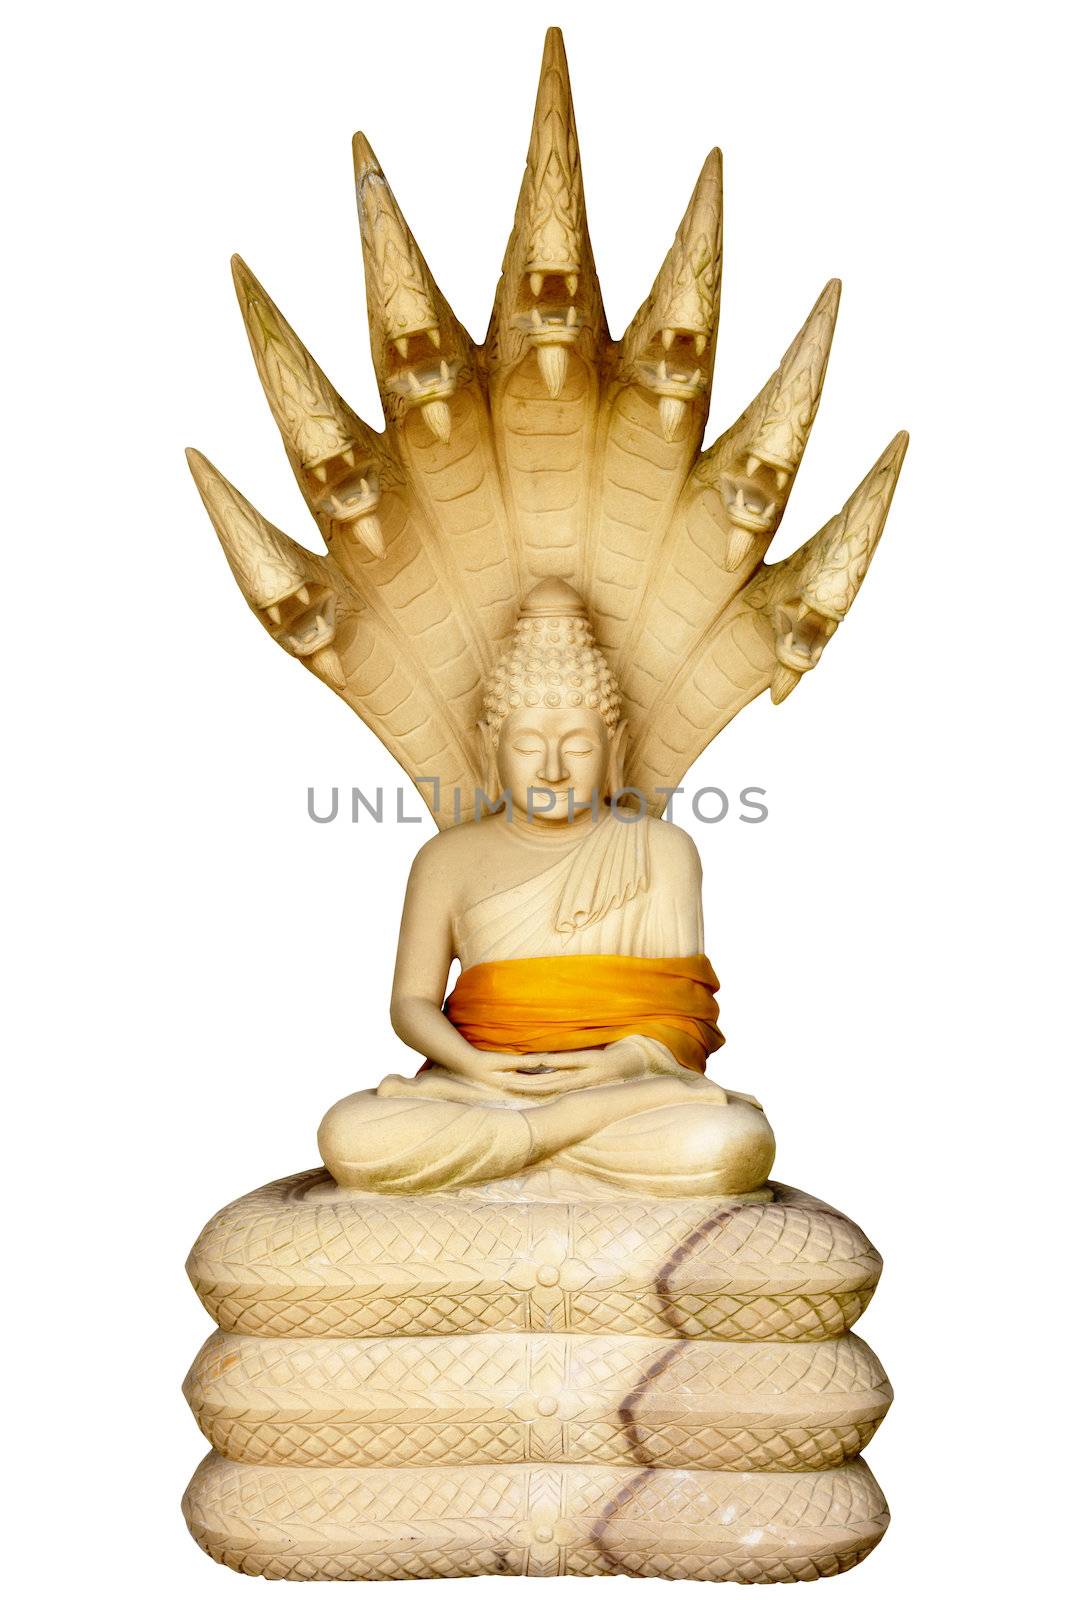 Muchalinda - stone sculpture of the Buddhist religious